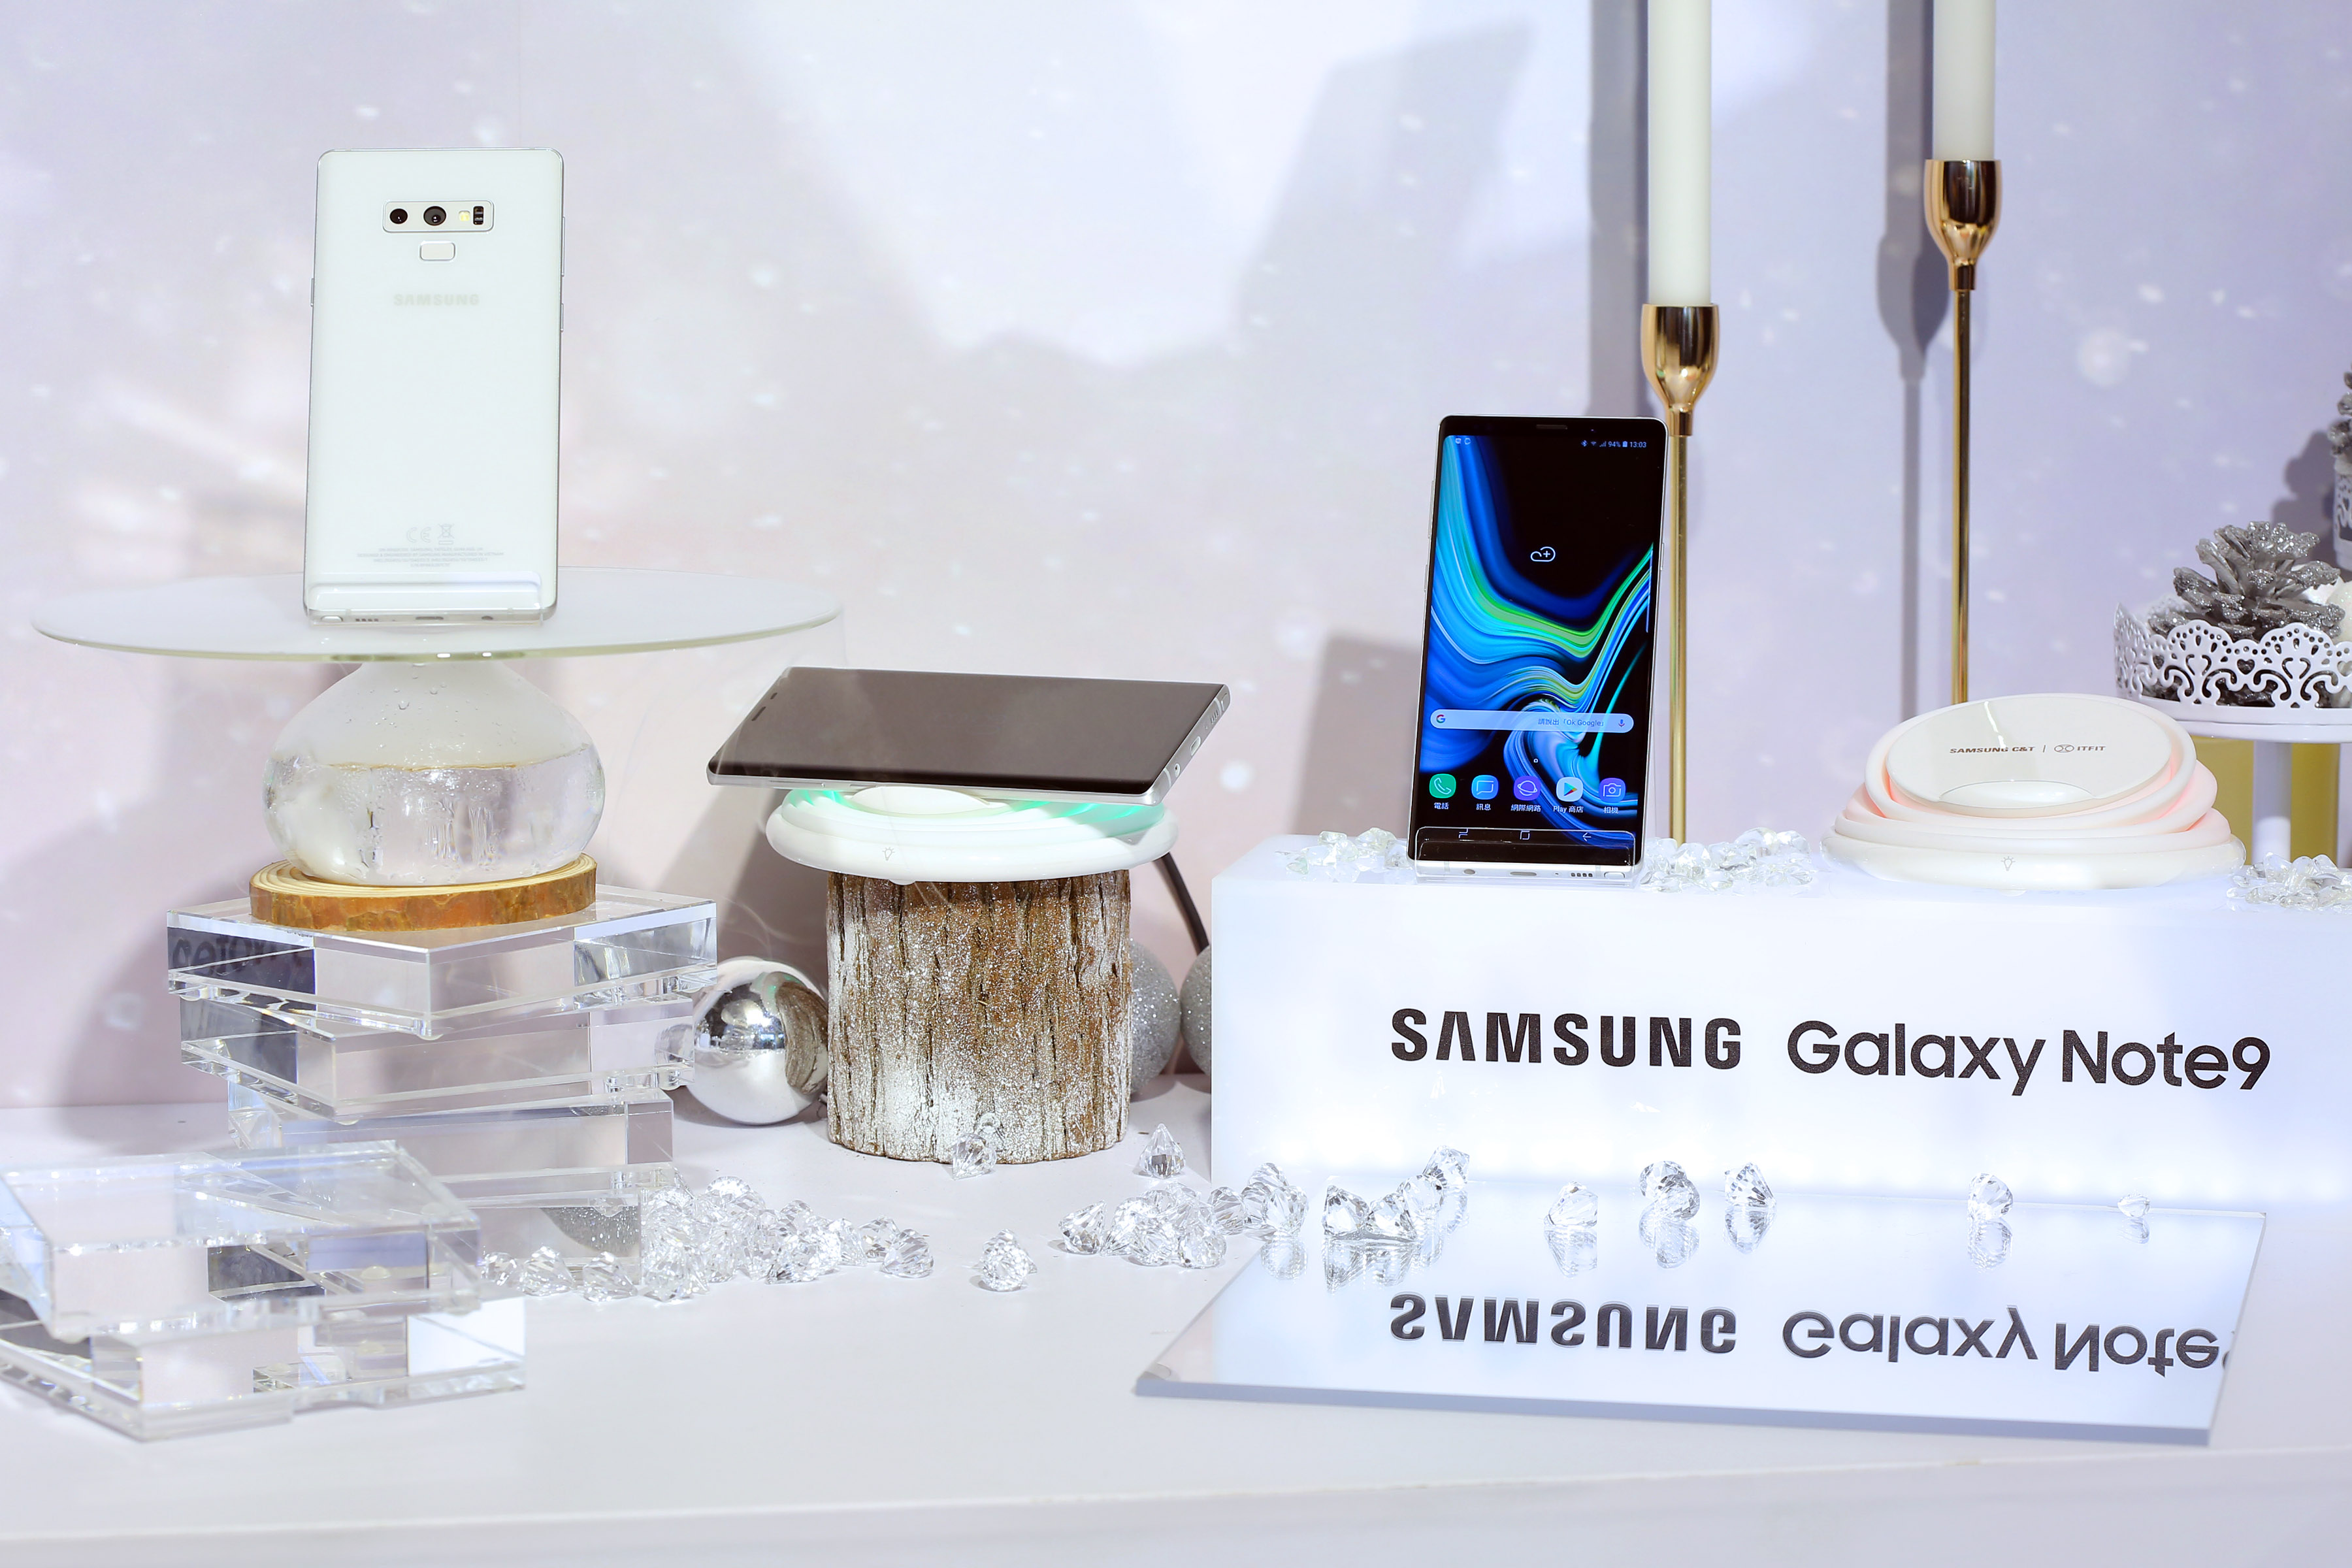 Samsung kar beyazı Galaxy Note 9 modelini tanıttı